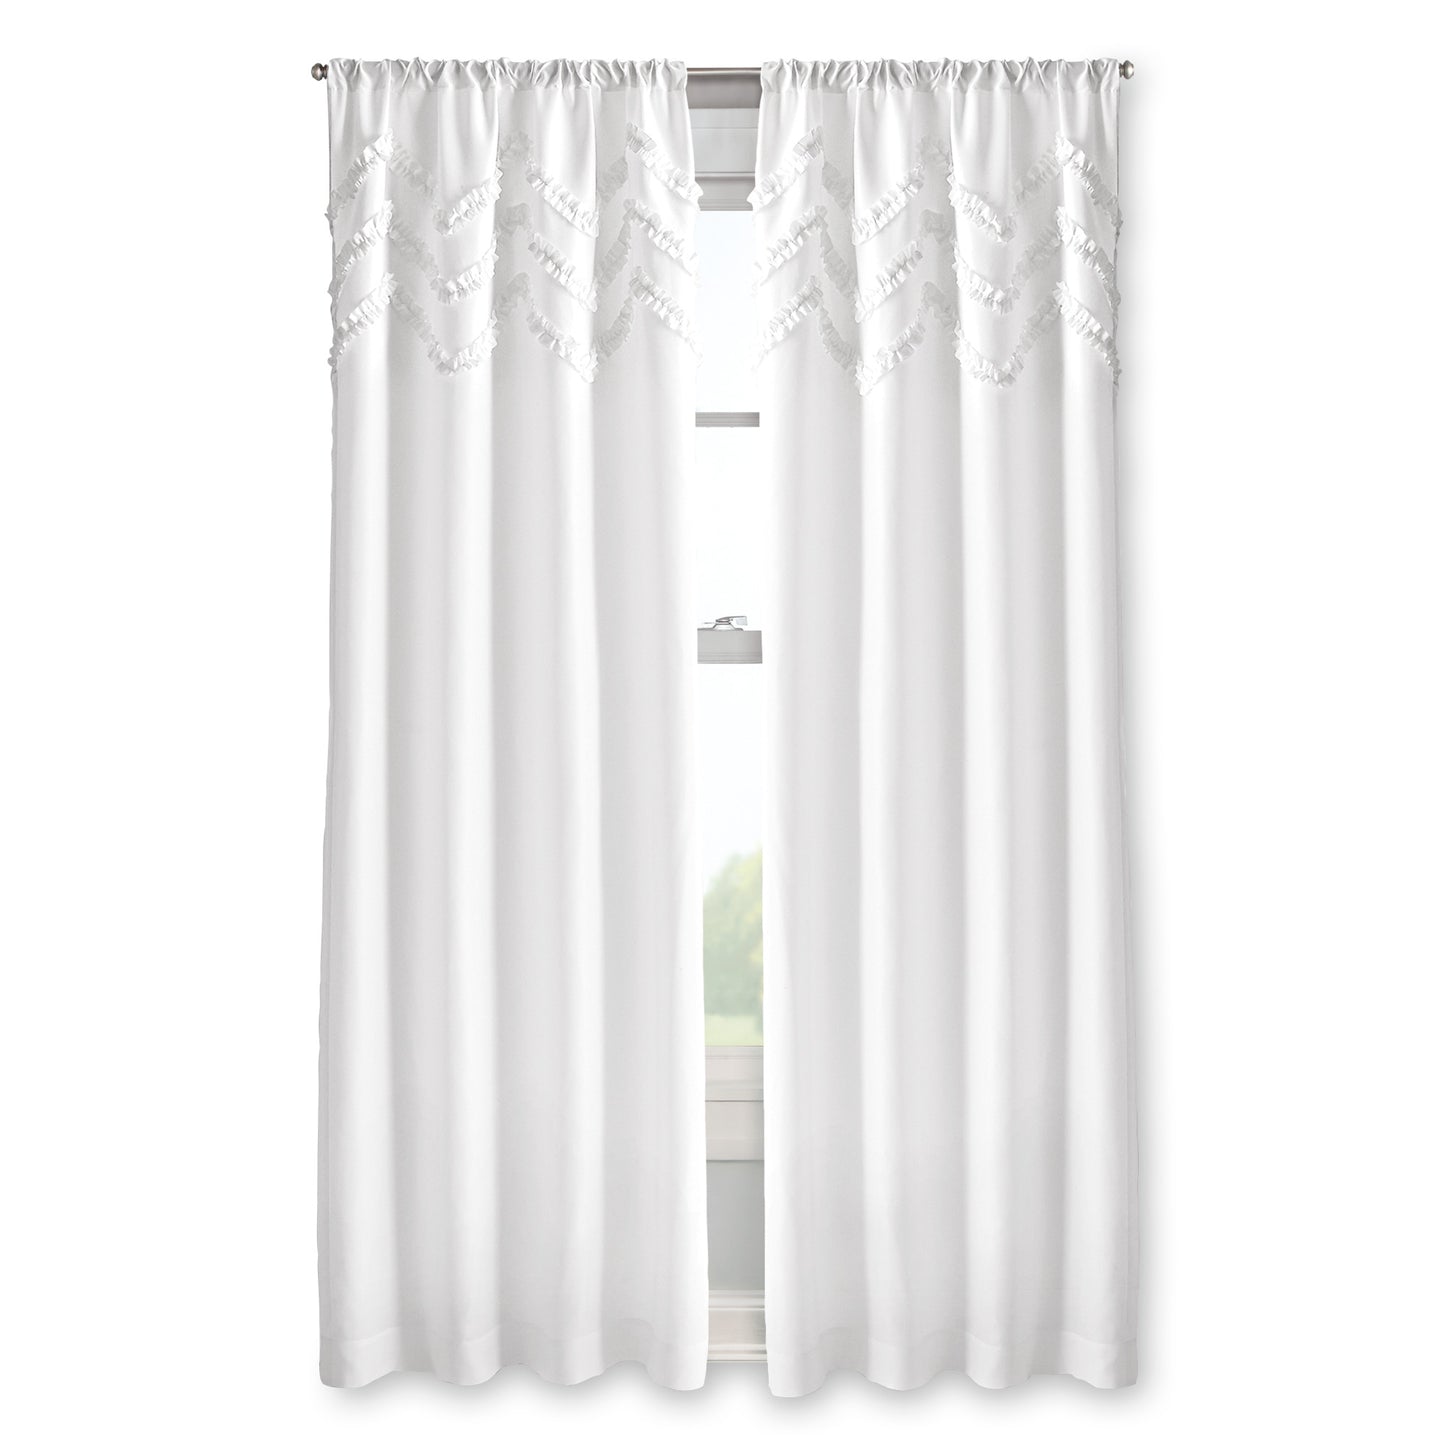 Chevron ruffle white poletop window curtain panel